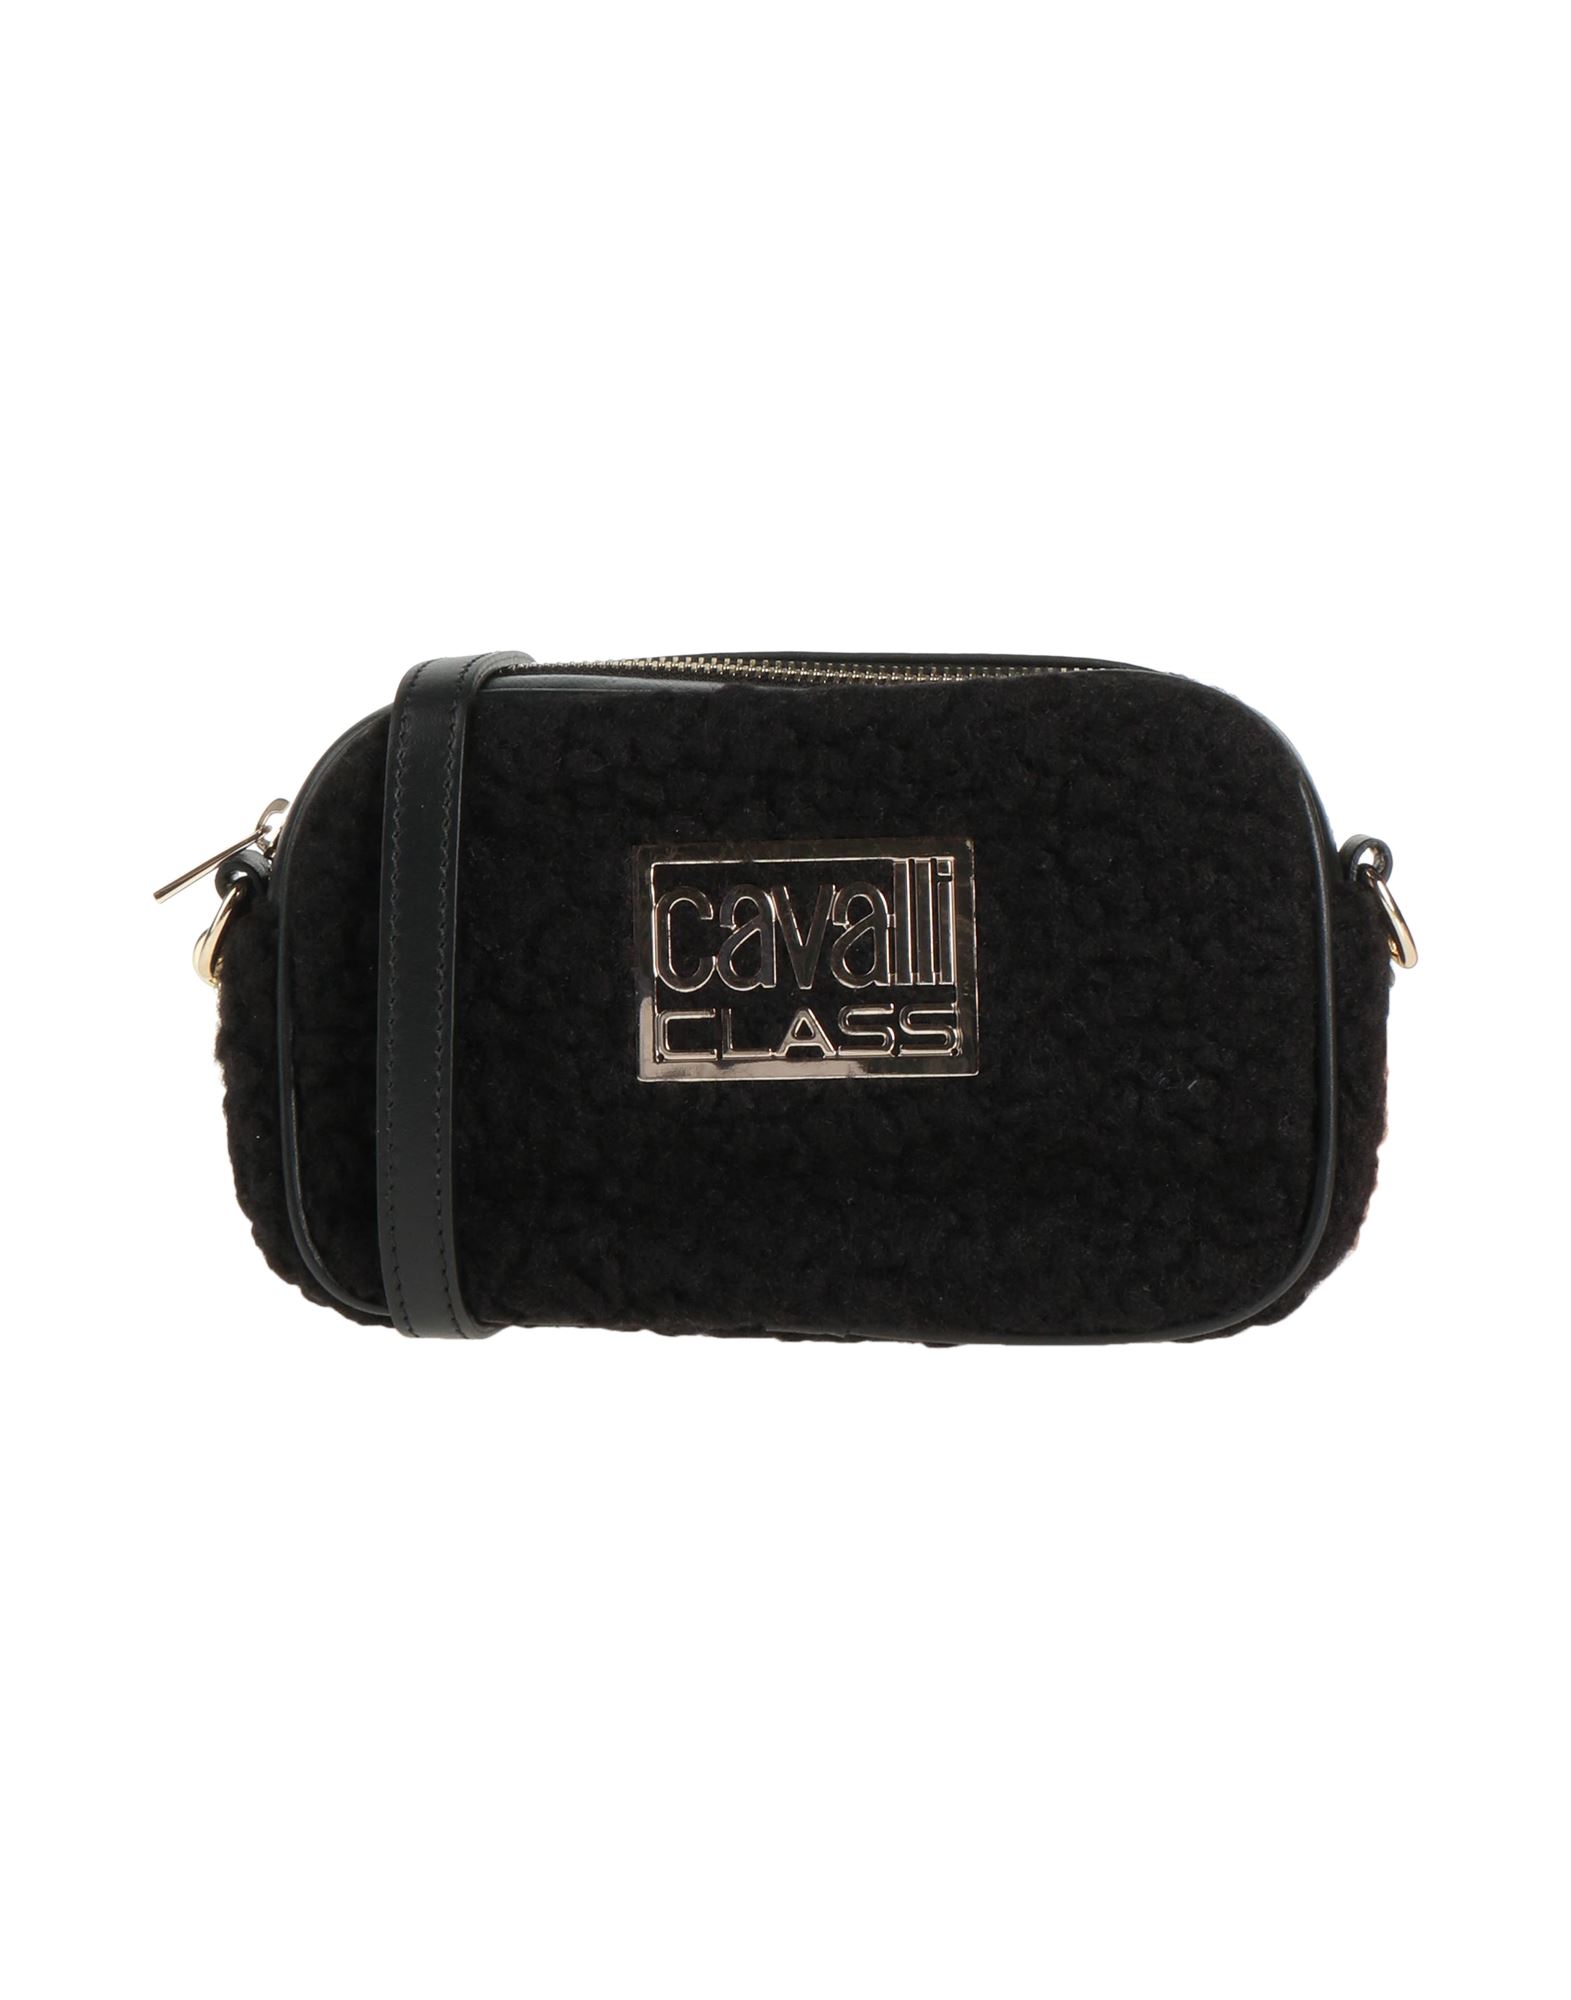 Cavalli Class Handbags In Black